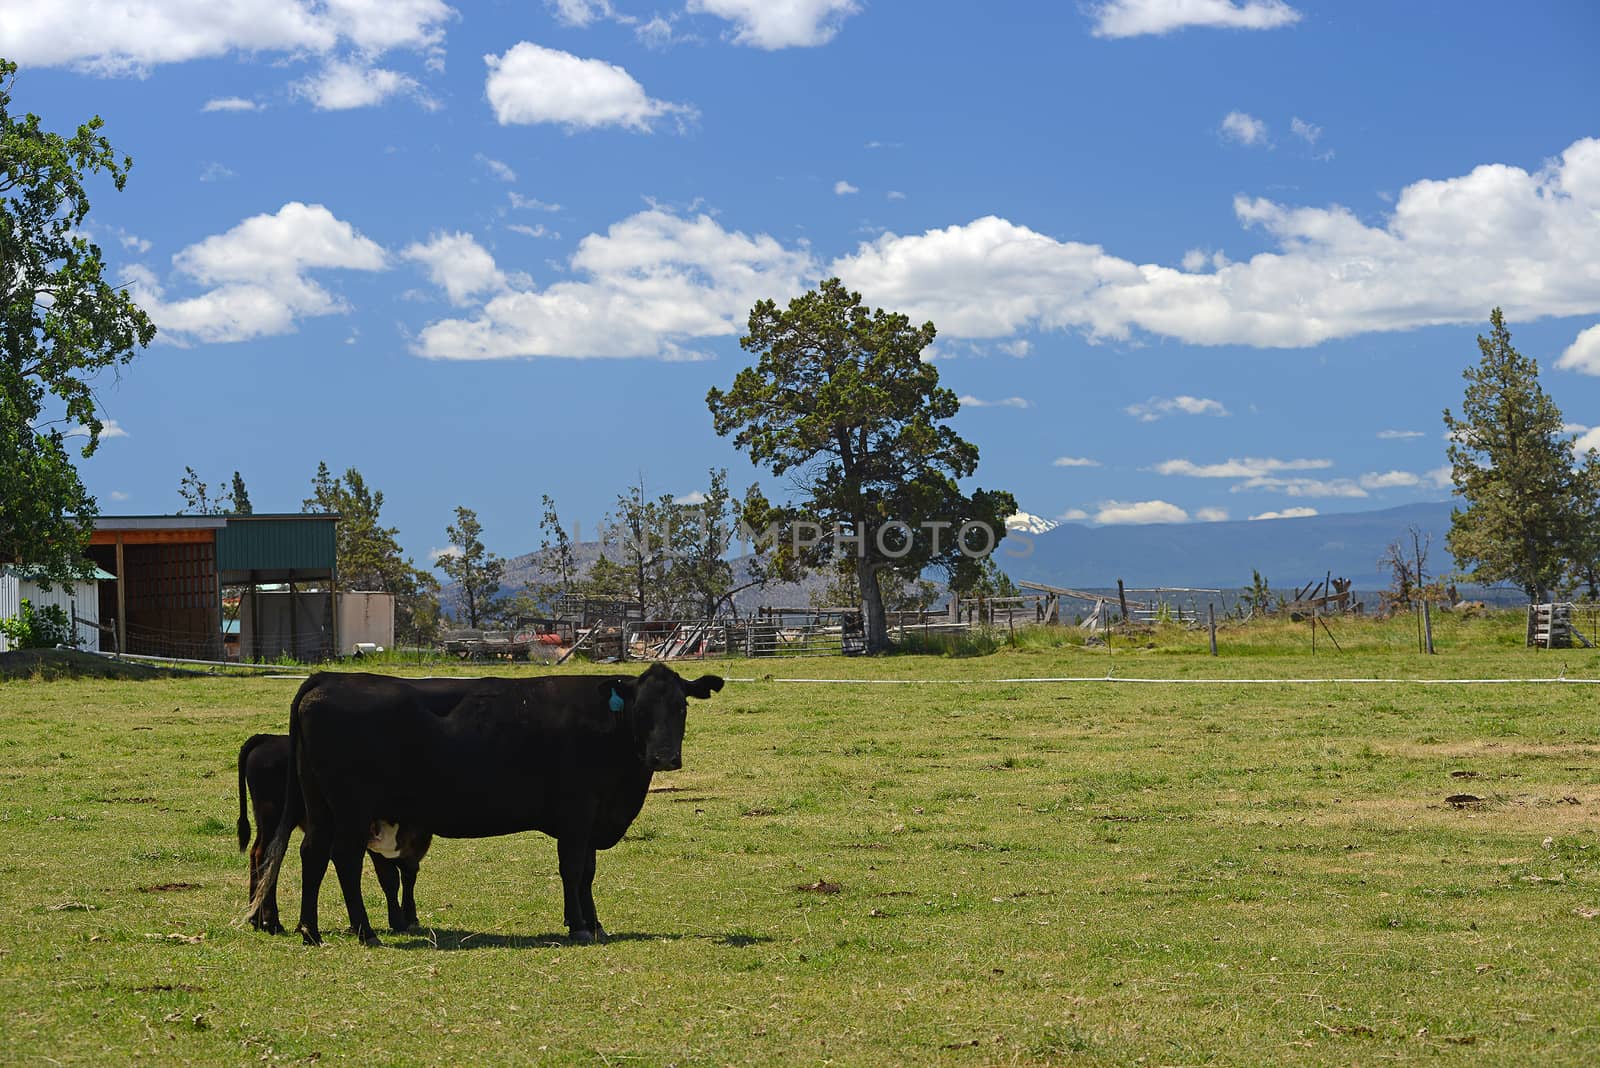 black cow in a grass field